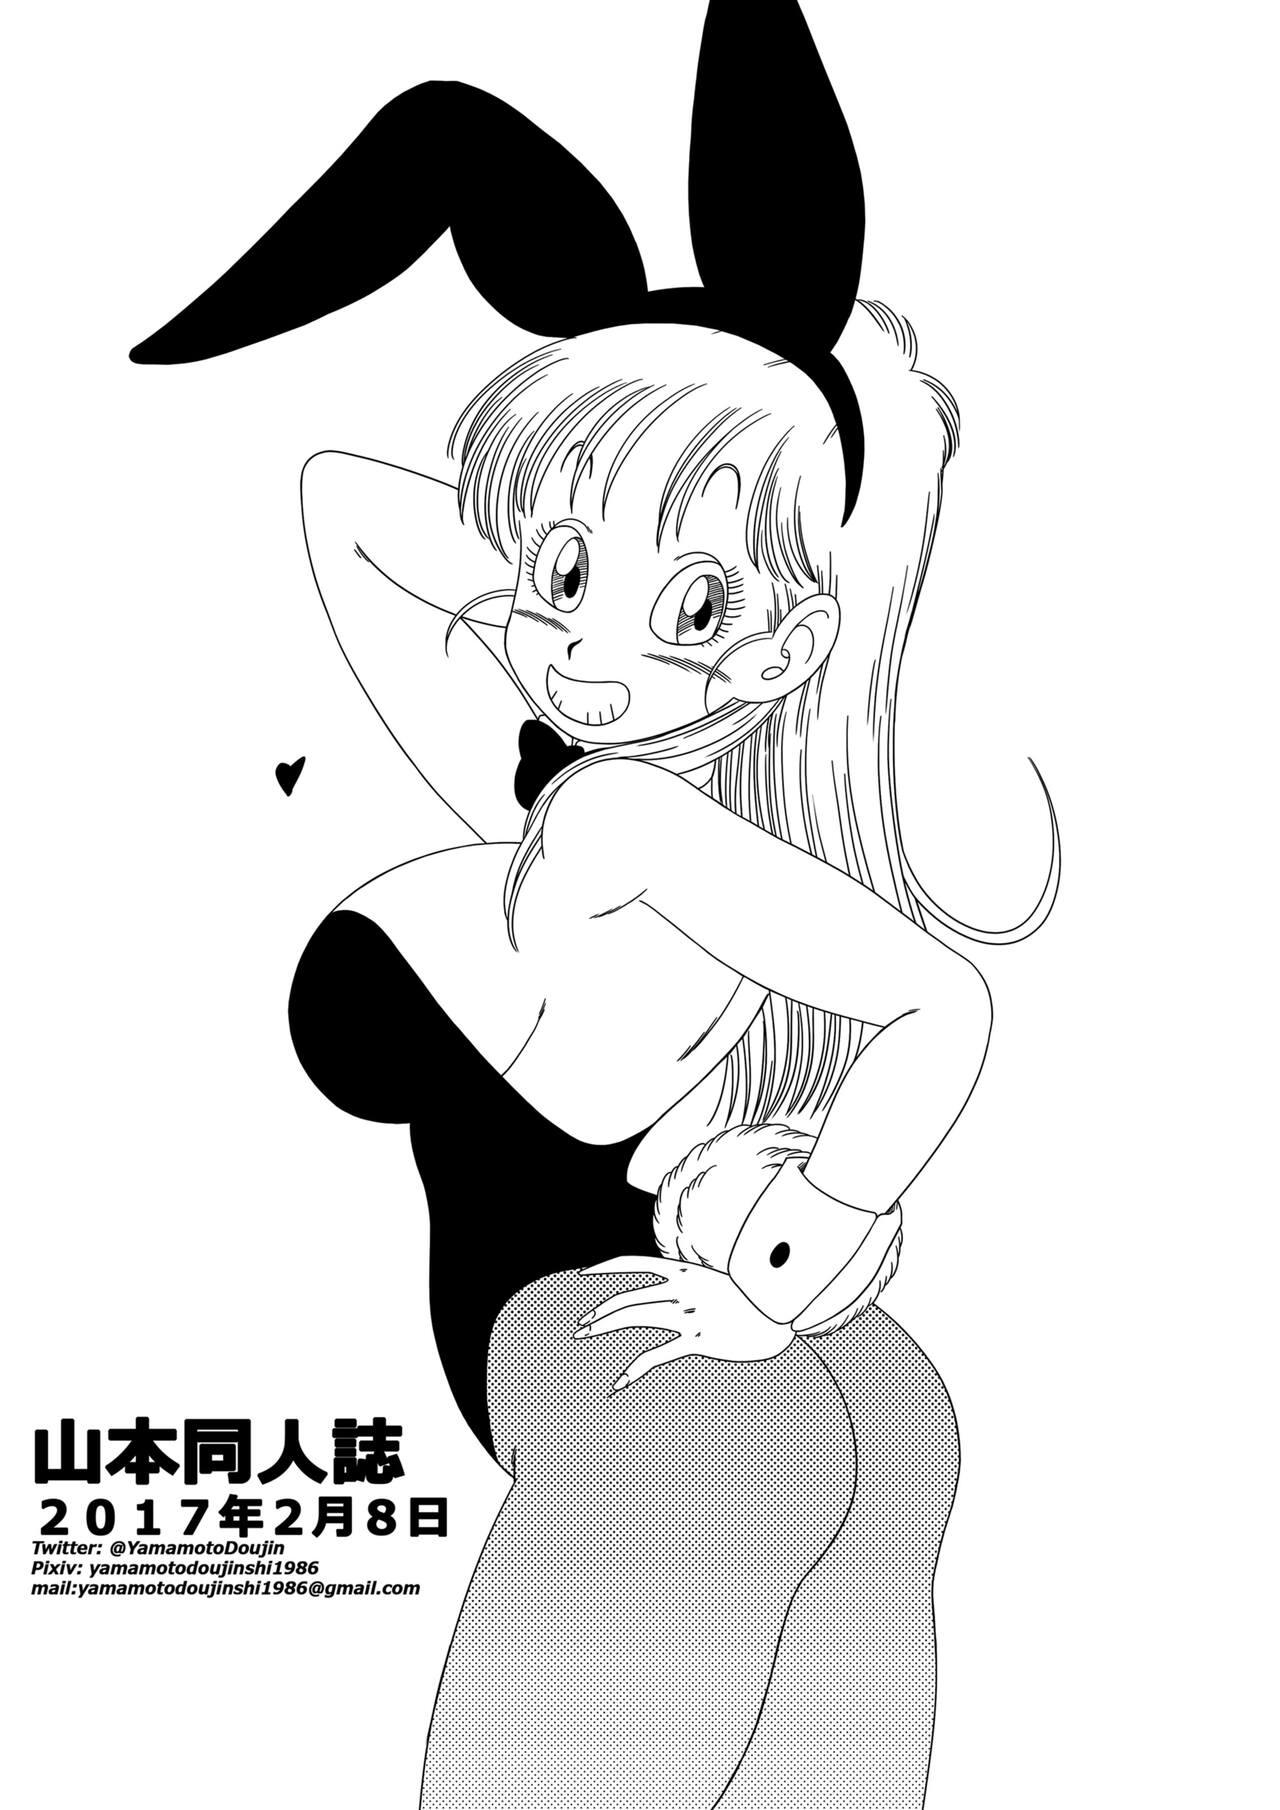 Bunny Girl Transformation 20